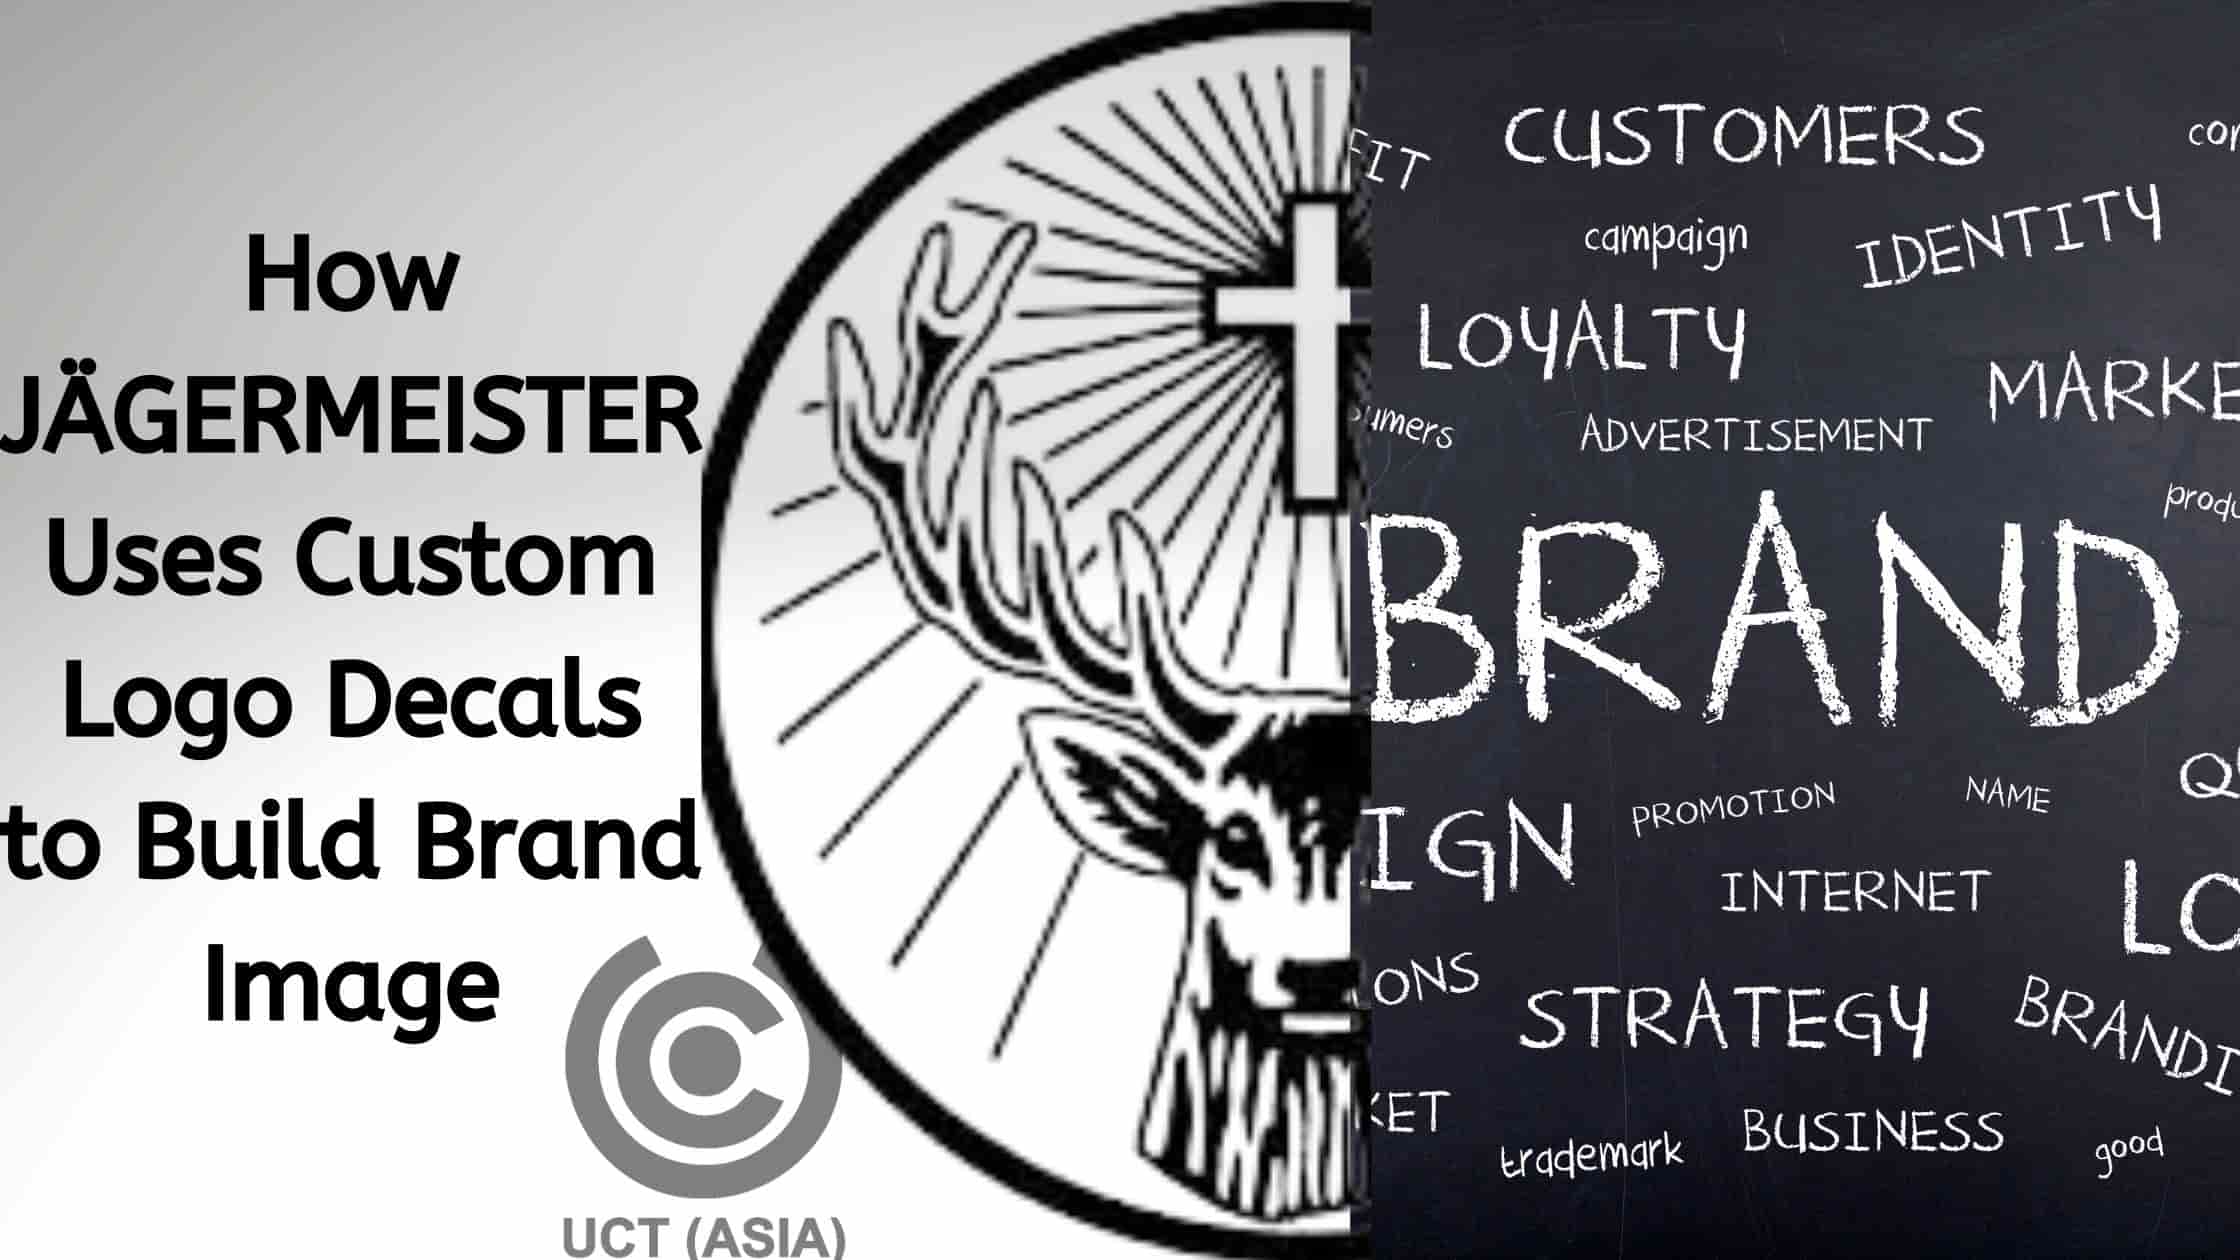 How JÄGERMEISTER Uses Custom Logo Decals to Build Brand Image (1)